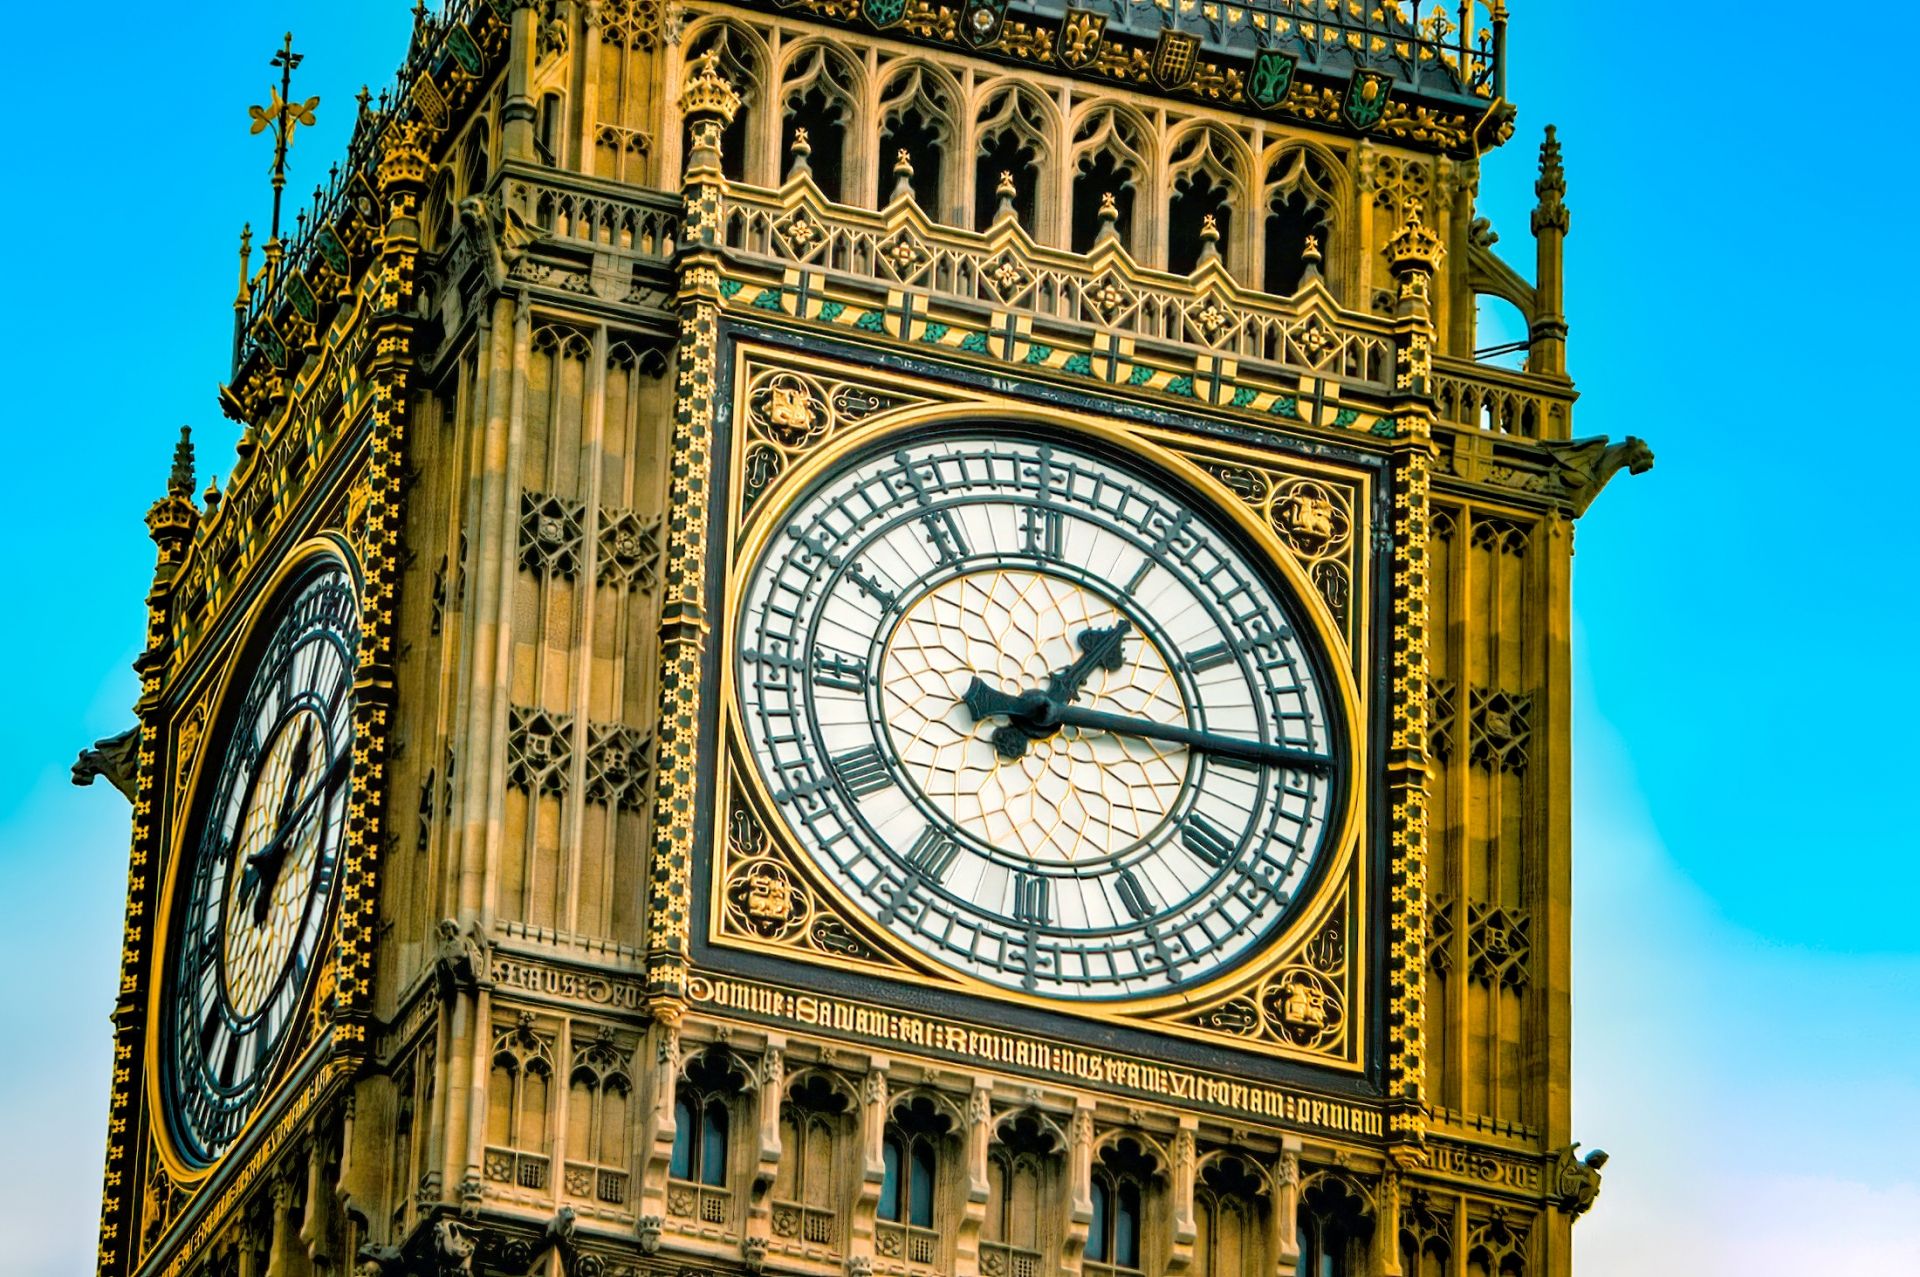 The clock of Big Ben